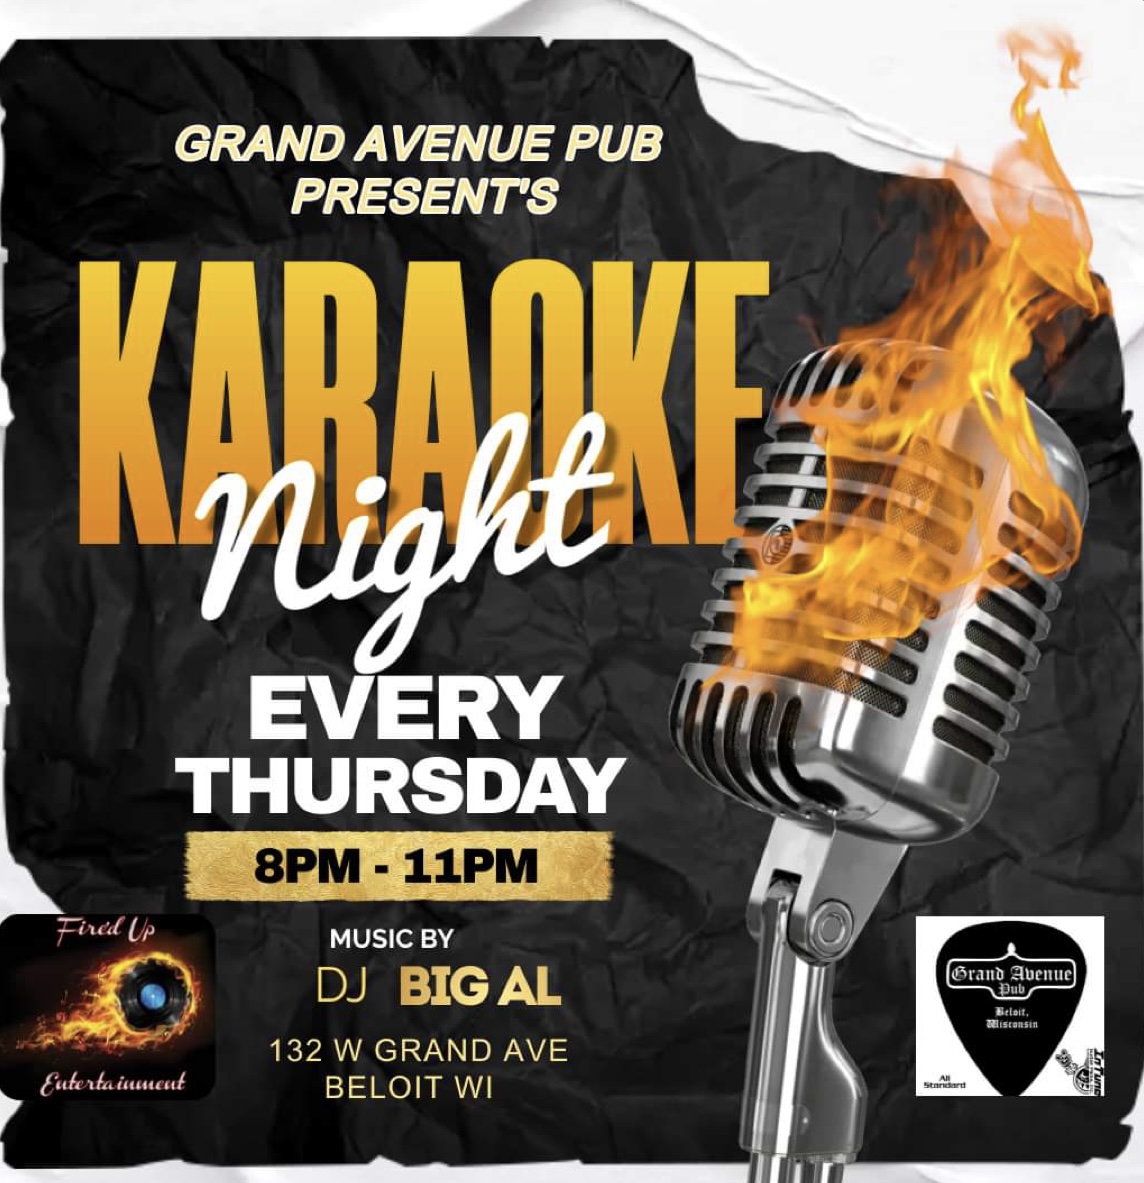 Thursday night Karaoke